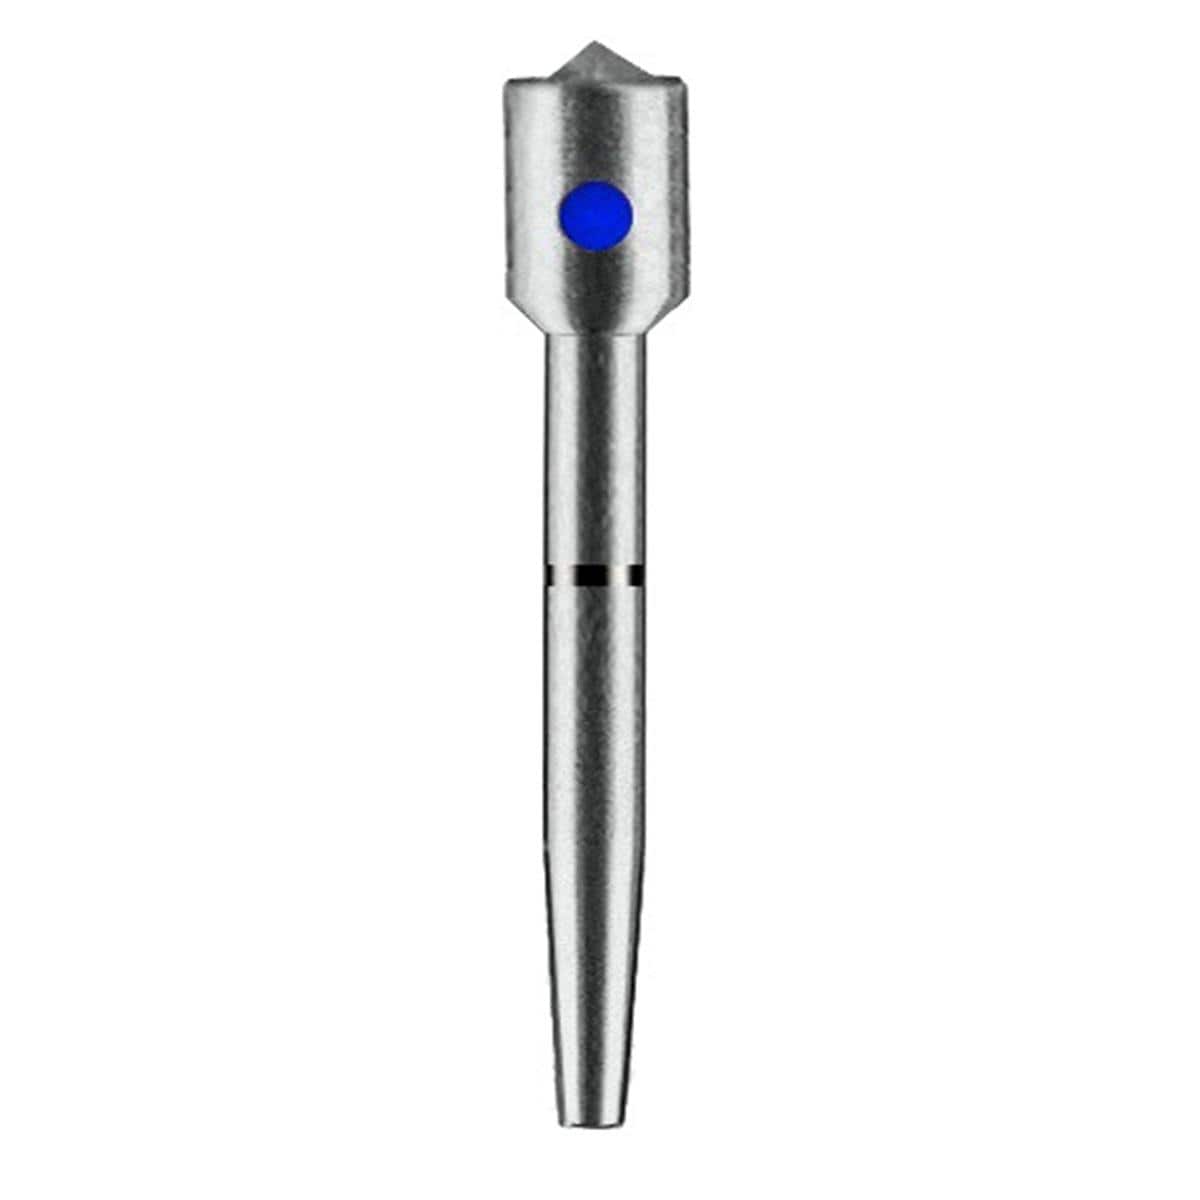 Pyxel numrique Silver - Cylindro-coniques - Bleu - Bote de 3 - FSB Innovation